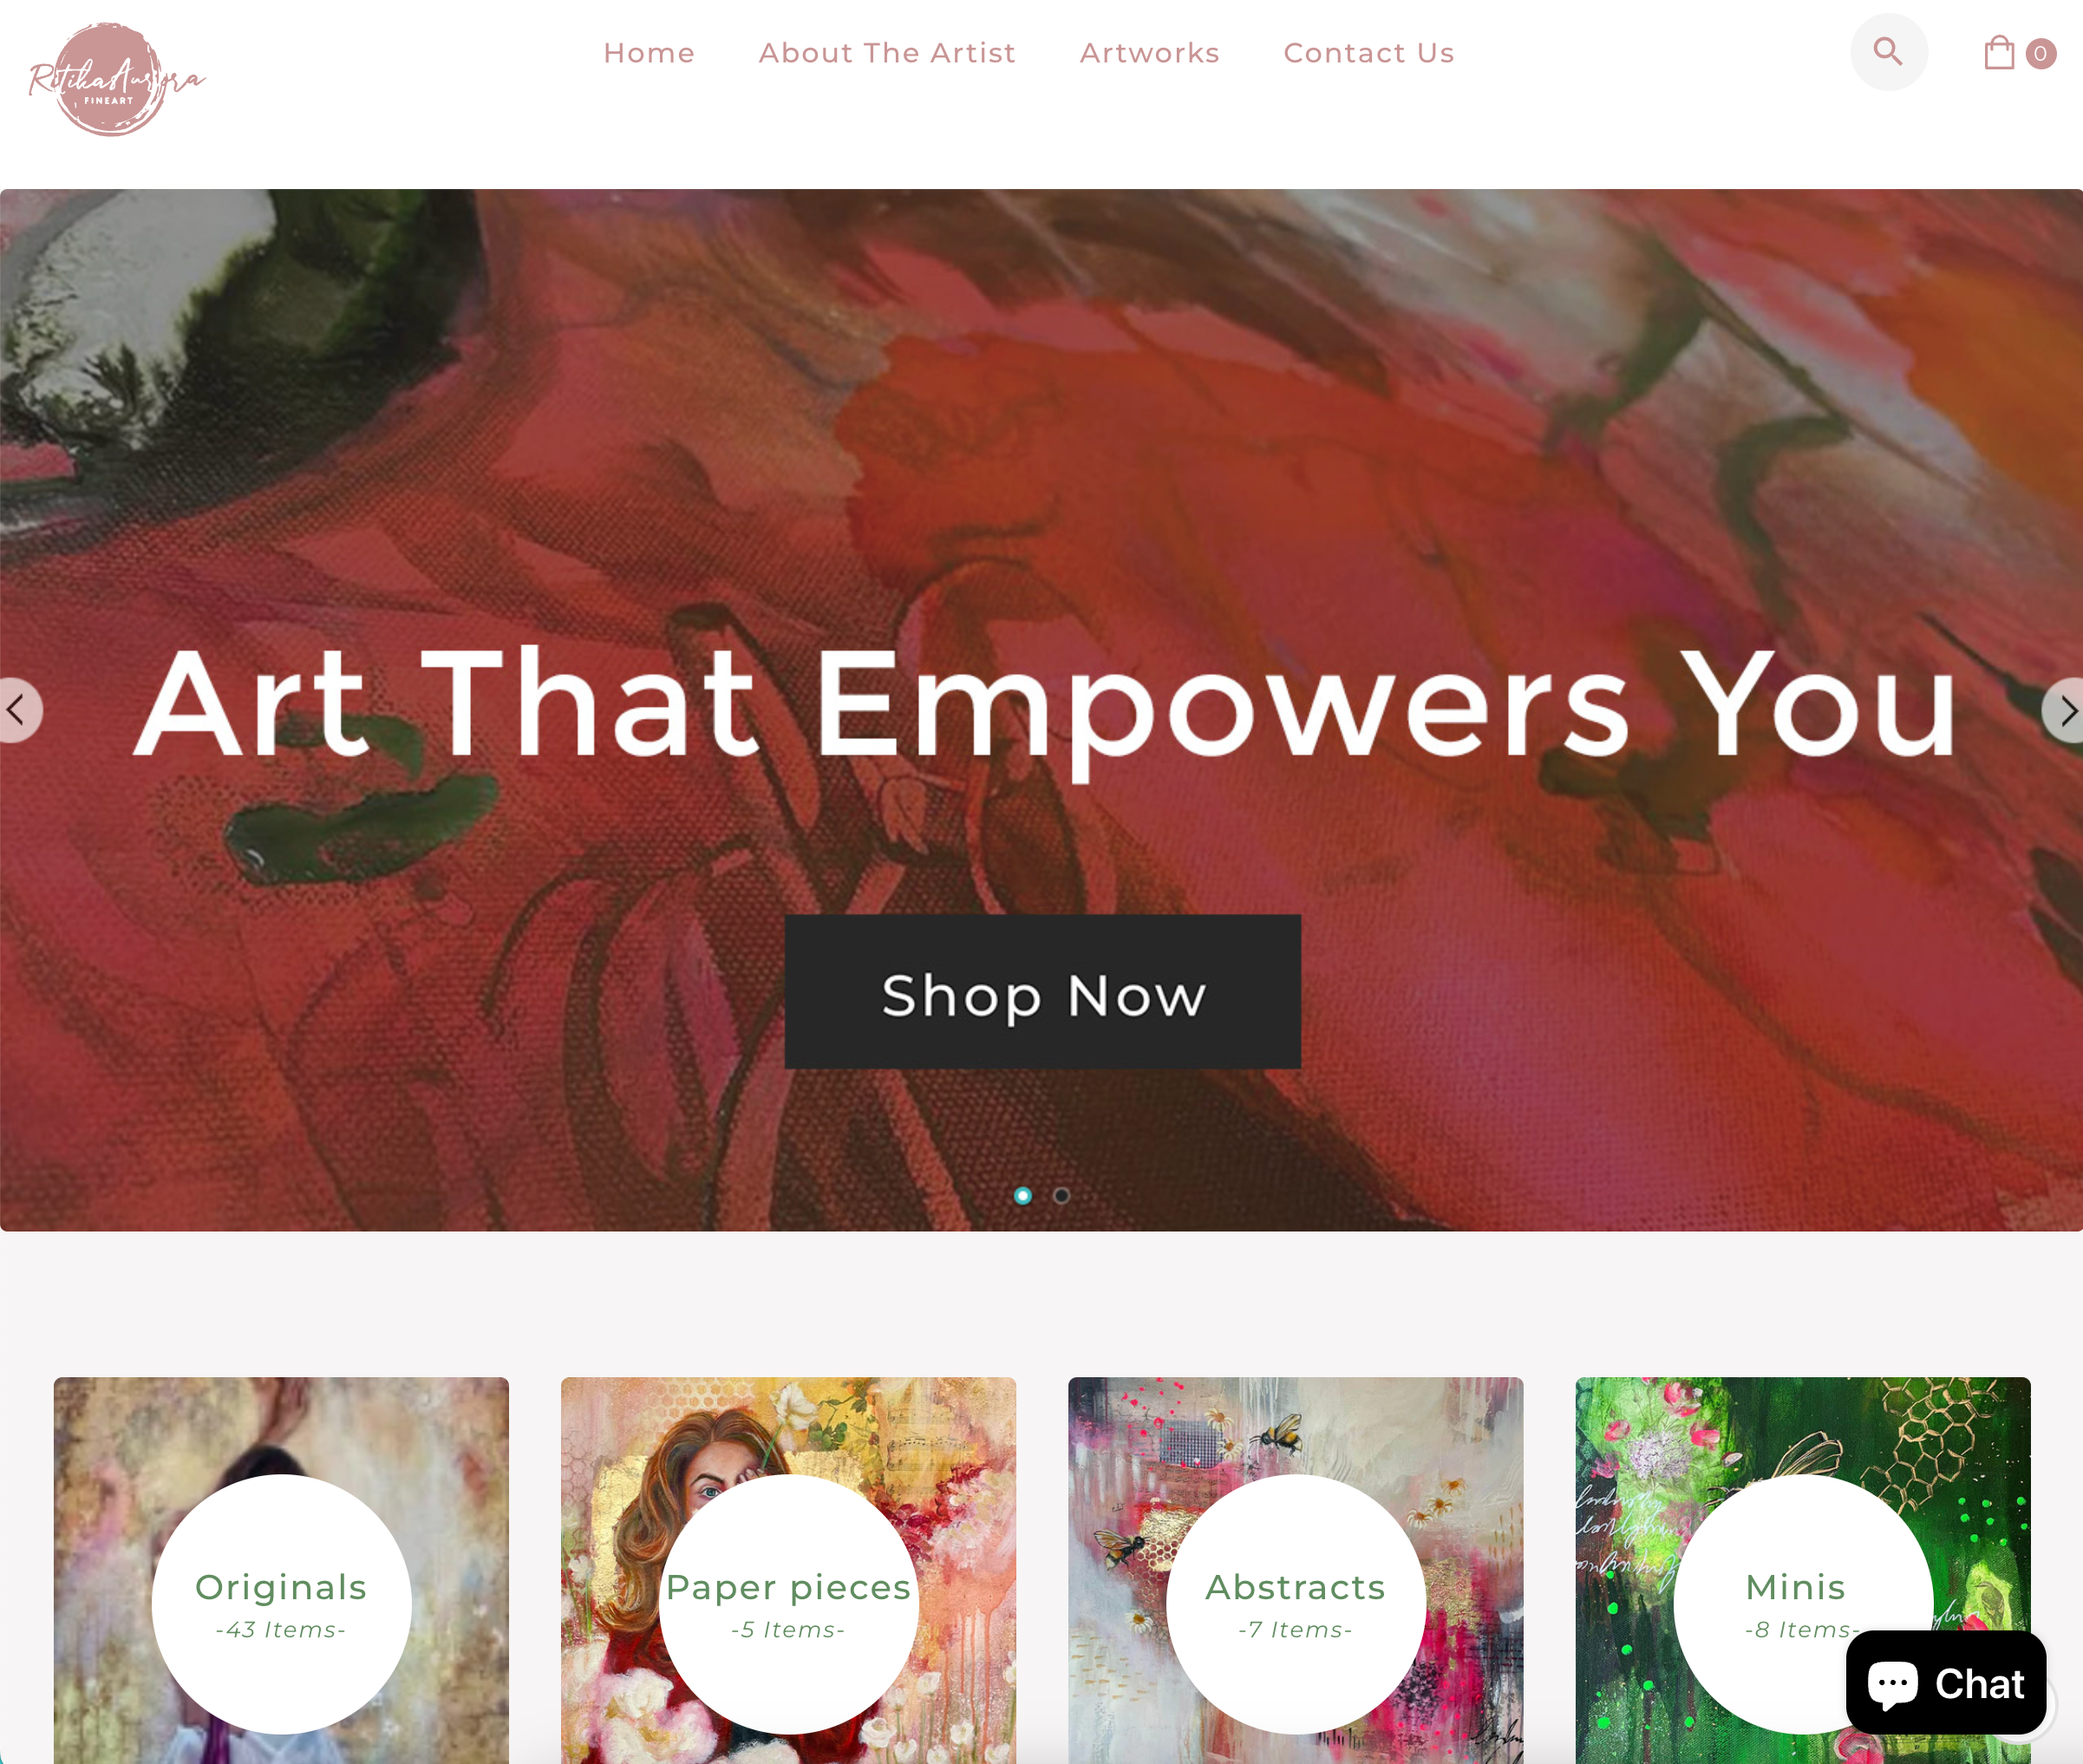 Professional portfolio website design from artist Ritika Aurora